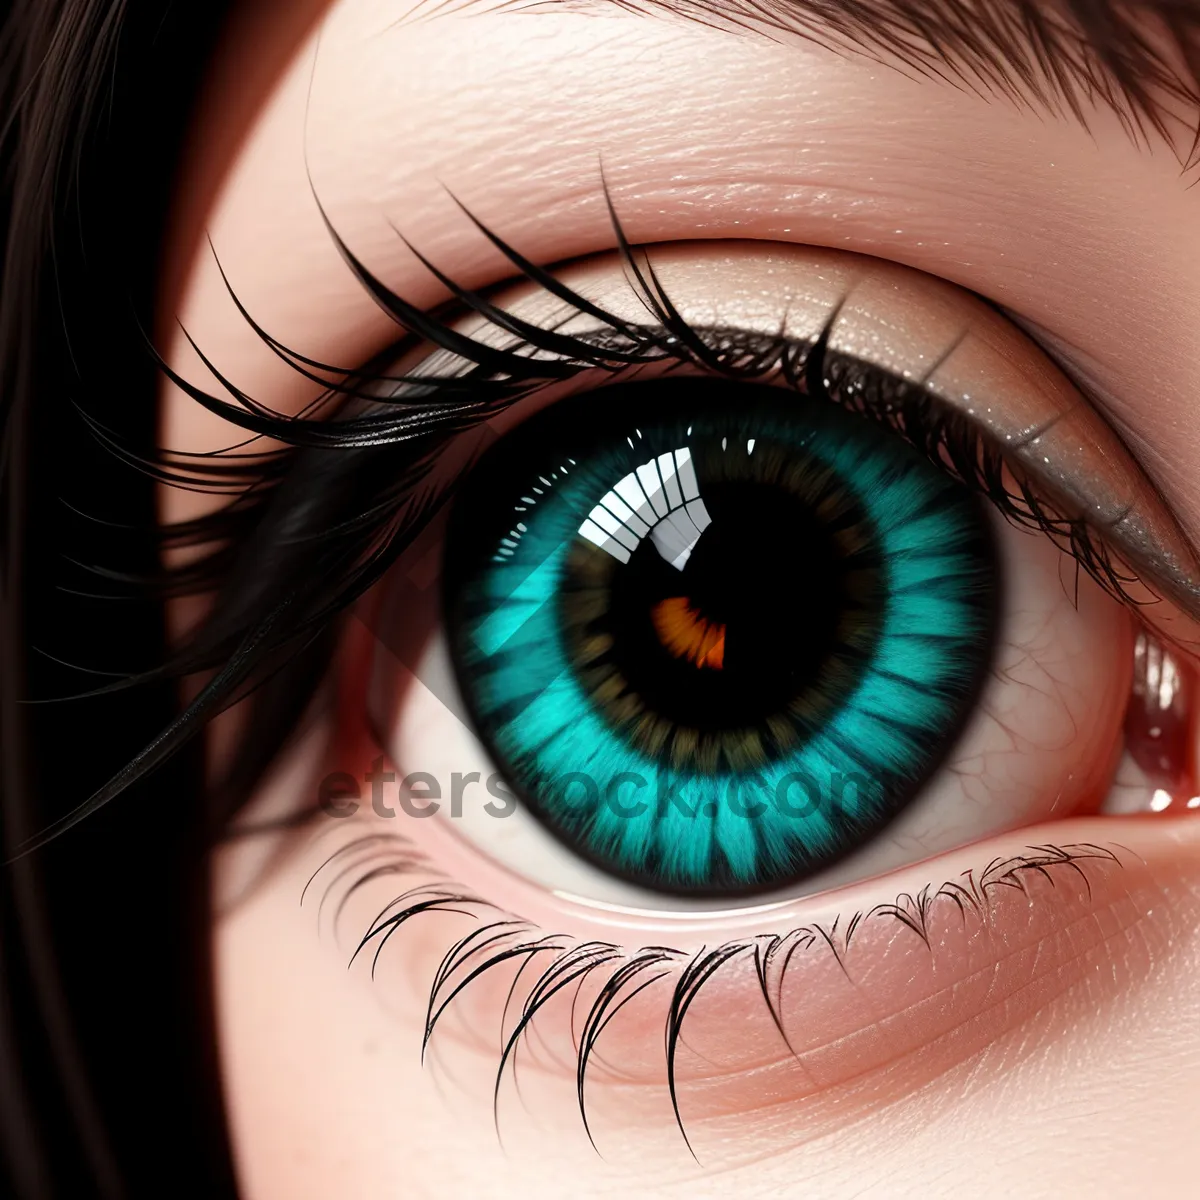 Picture of Captivating Close-up of Human Eyeball: Iris, Pupil, and Eyelashes